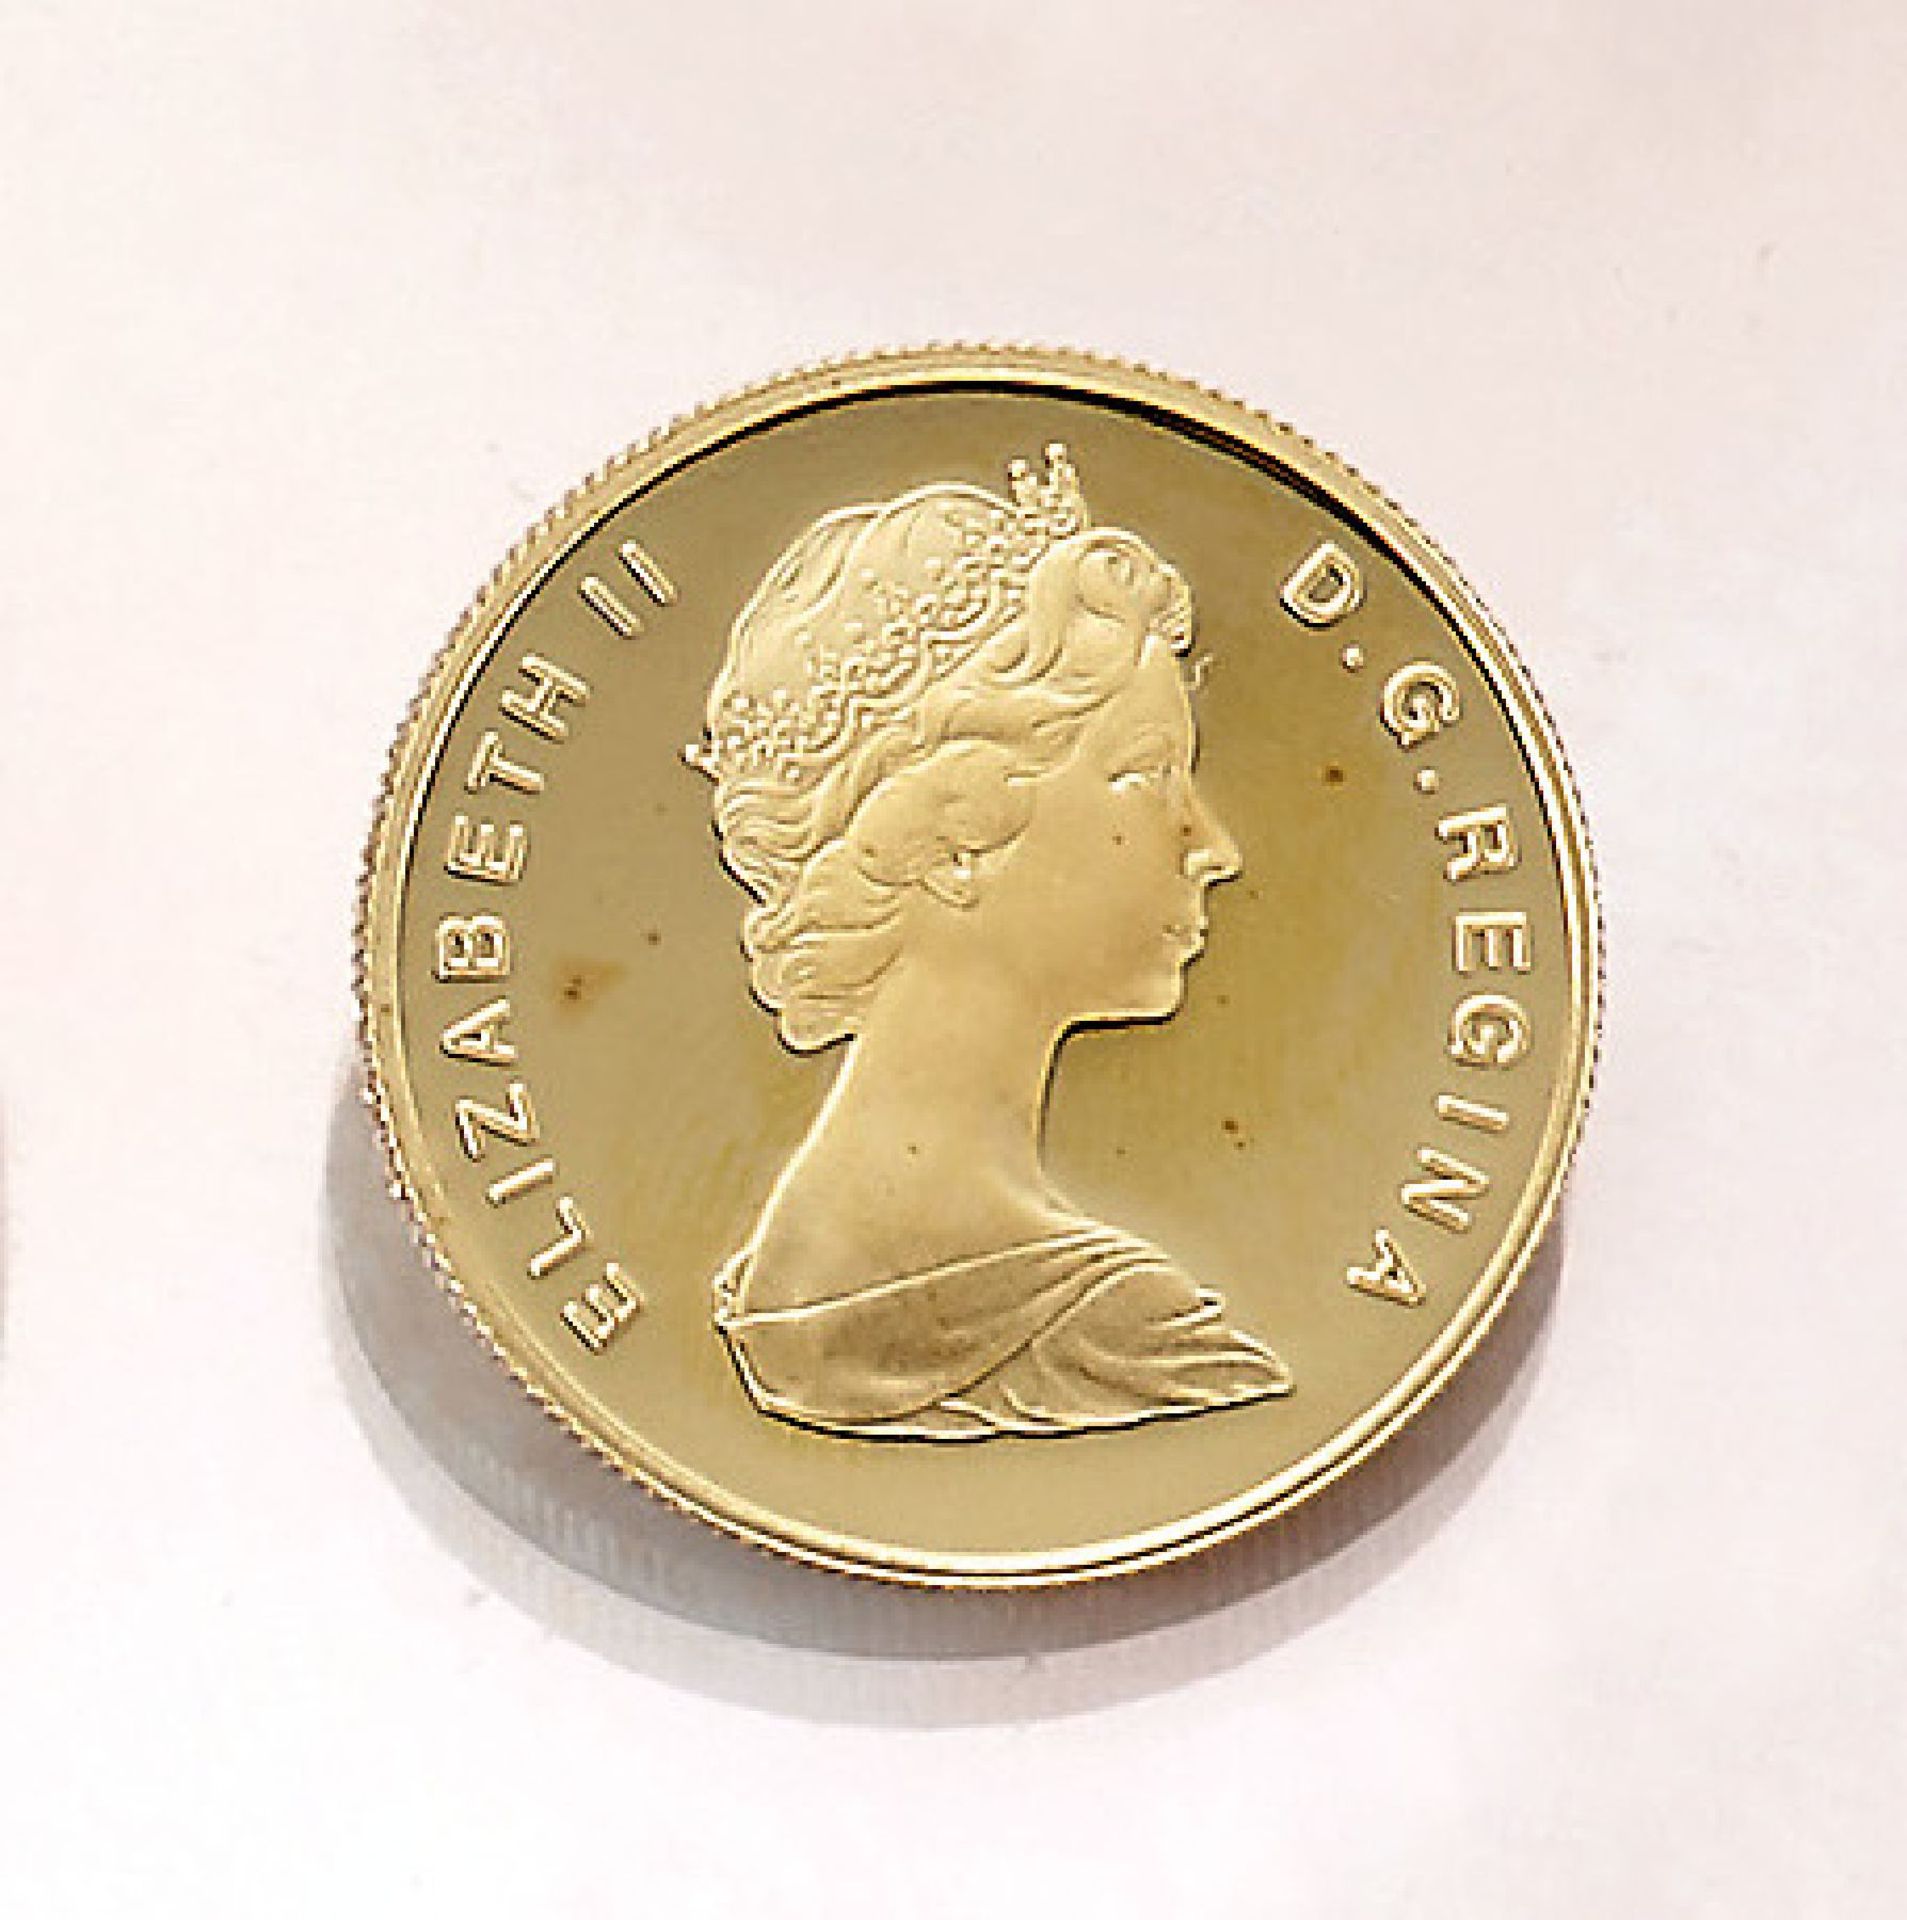 Goldmünze, 100 Dollars, Canada, 1983, Elizabeth II., St. John's 1583-1983, Neufund- landGold coin,